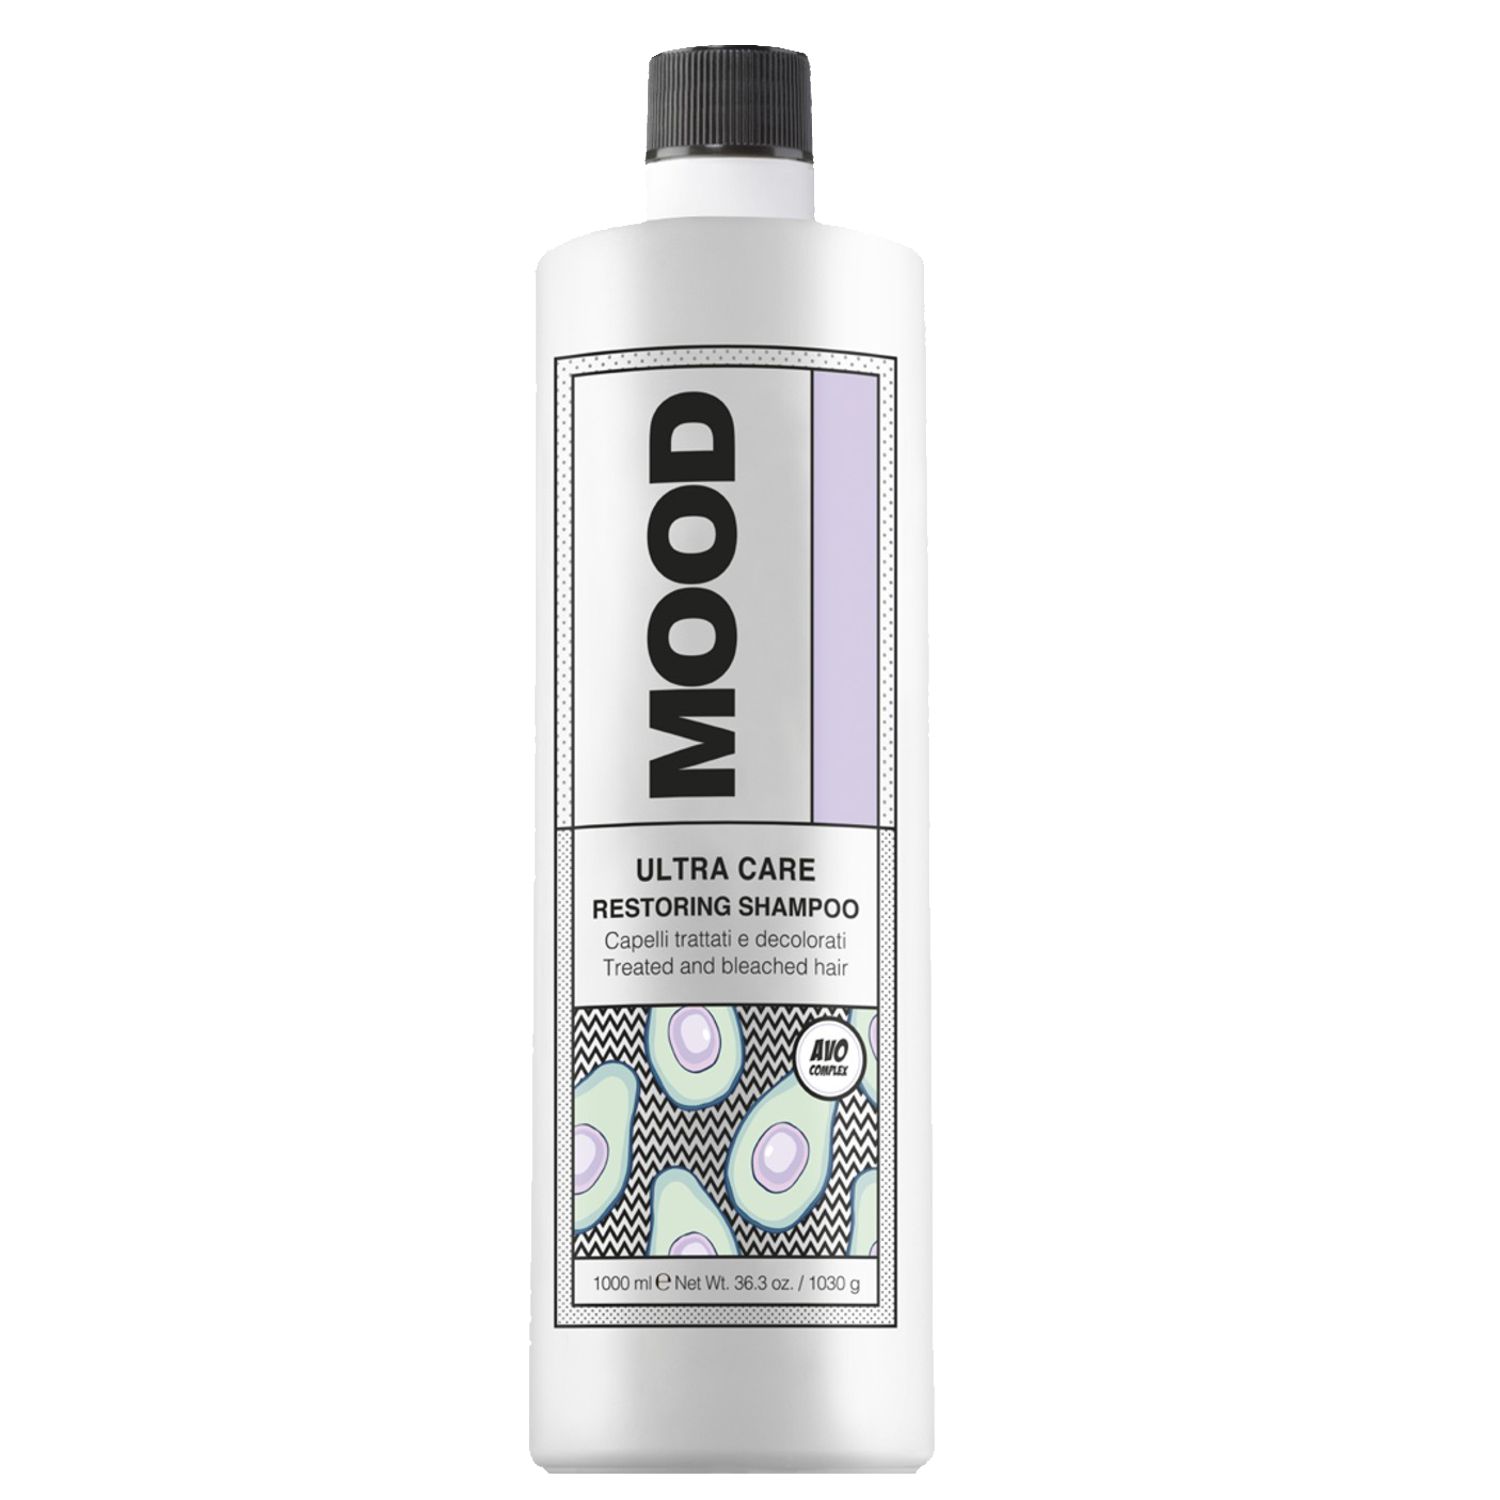 MOOD Ultra Care Restoring Shampoo 1 L